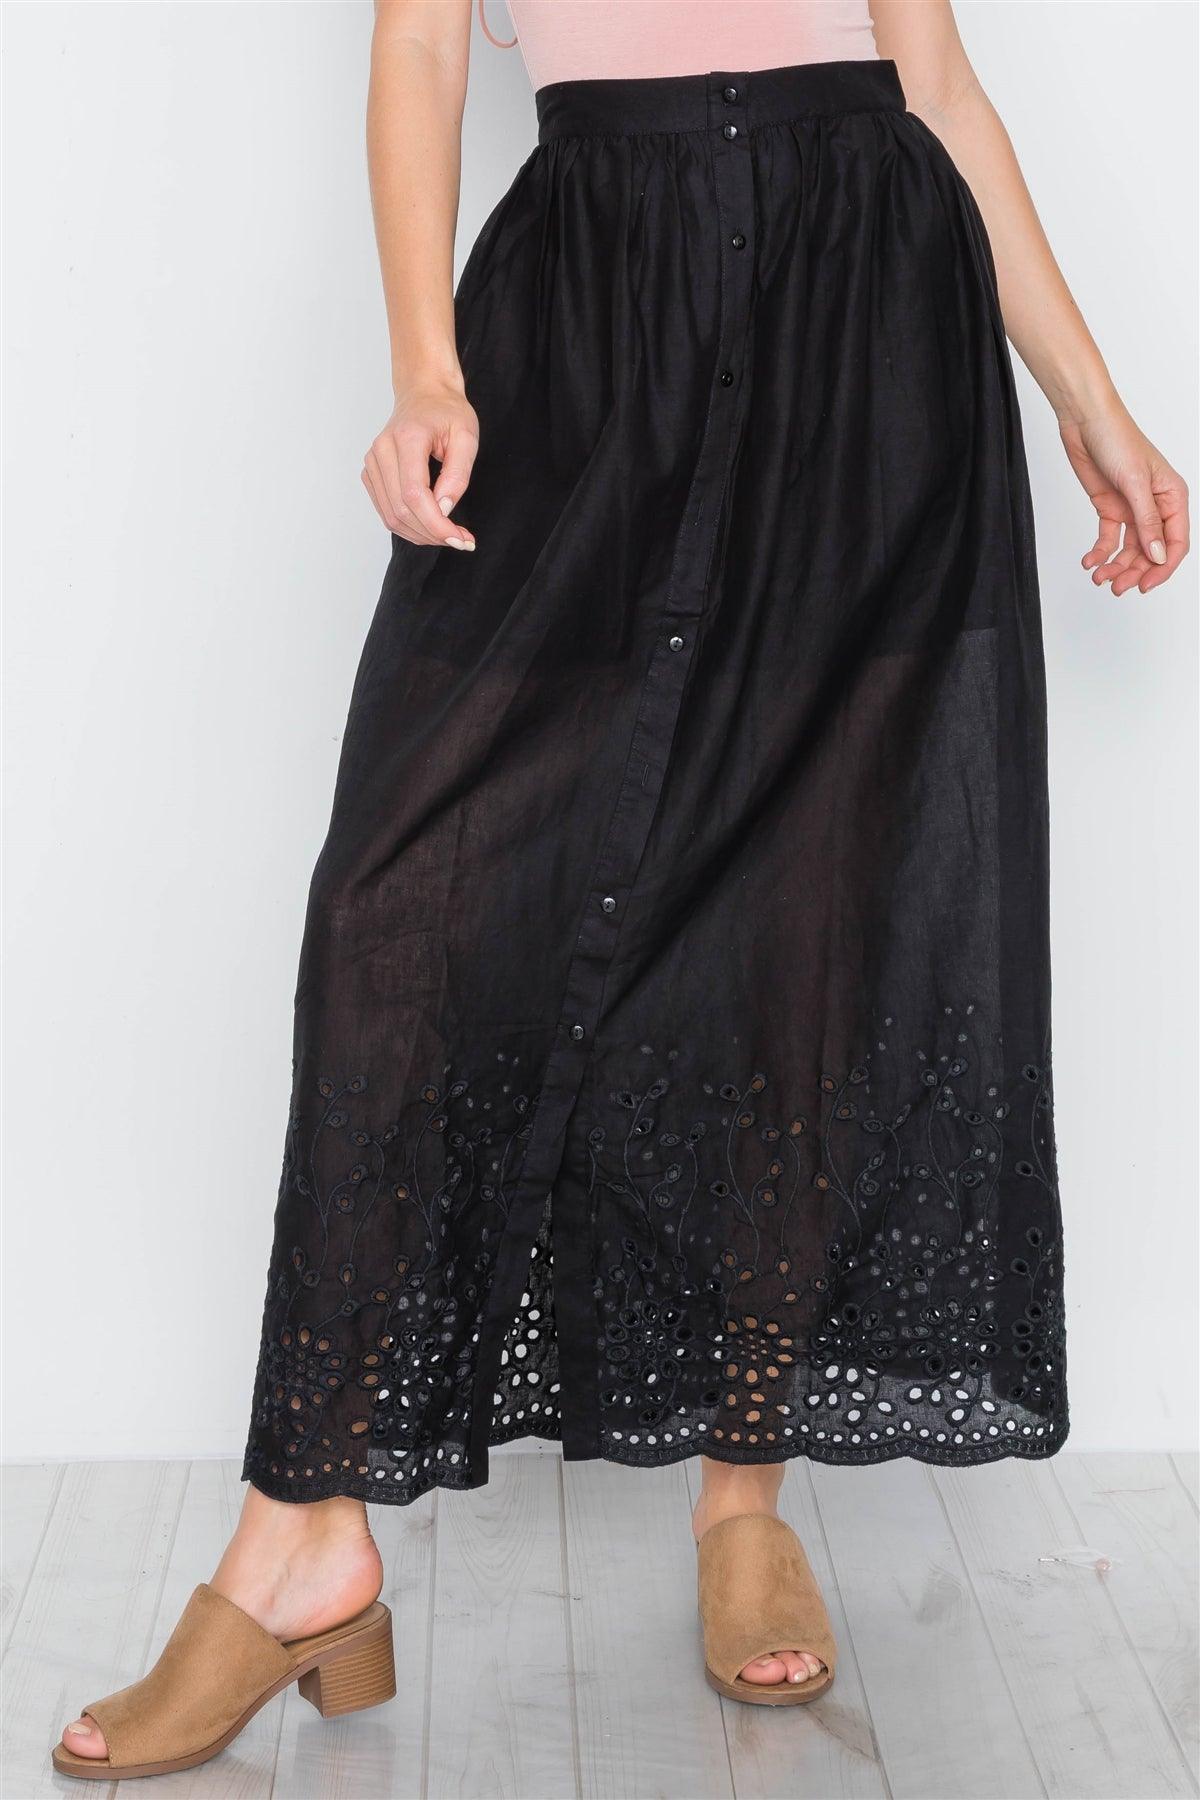 Black Floral Embroidery Maxi Boho Skirt /2-2-2